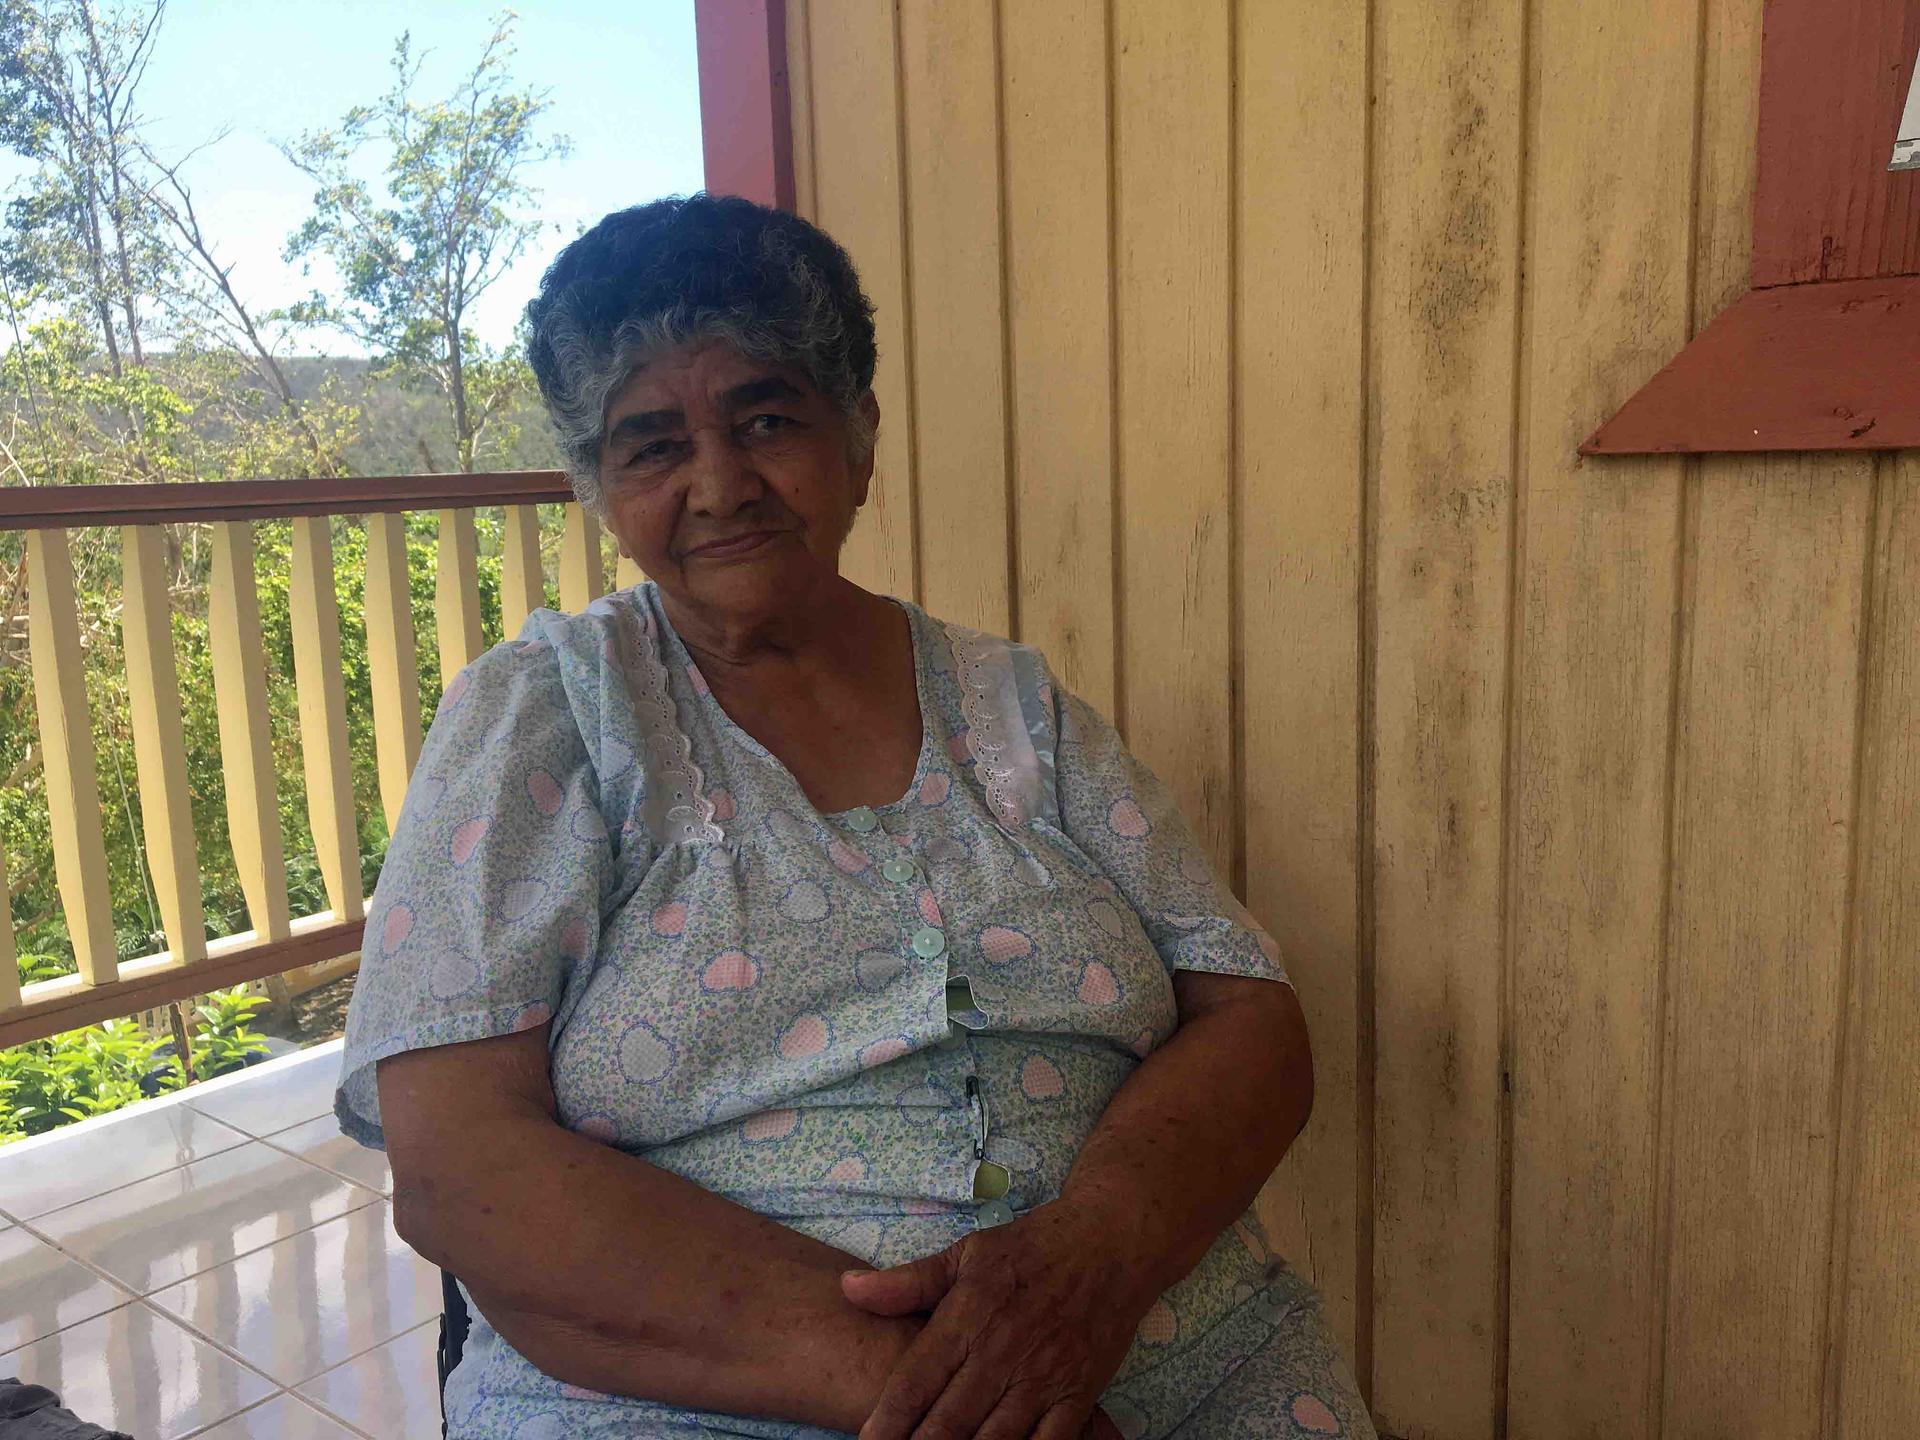 An elderly woman sitting on a porch.